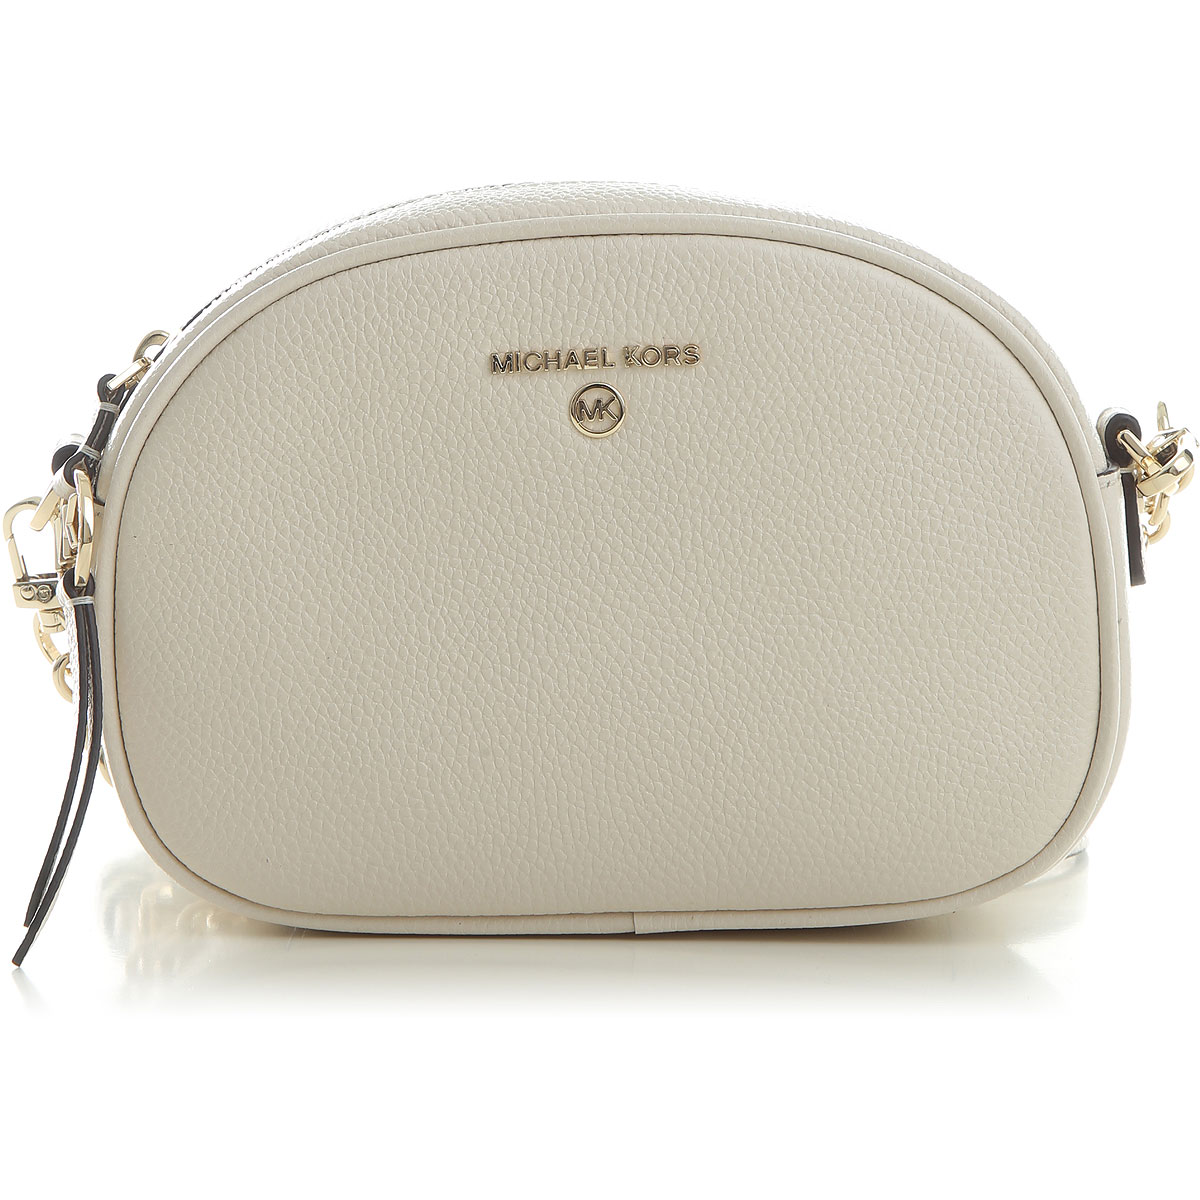 Handbags Michael Kors, Style code: 32s1lt9c0l-289-